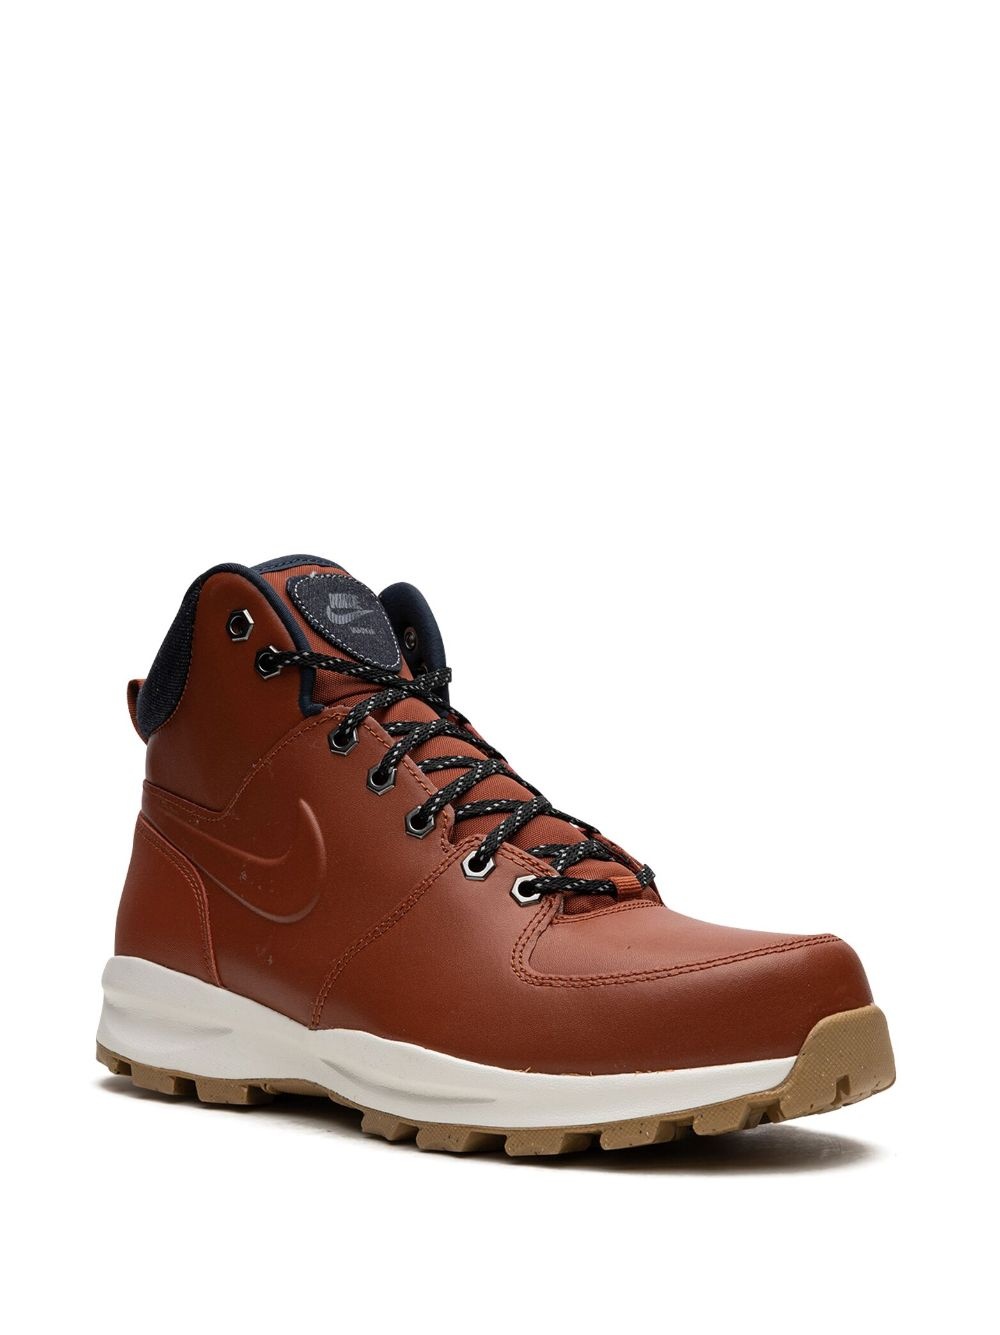 Manoa leather SE "Rugged Orange" boots - 2